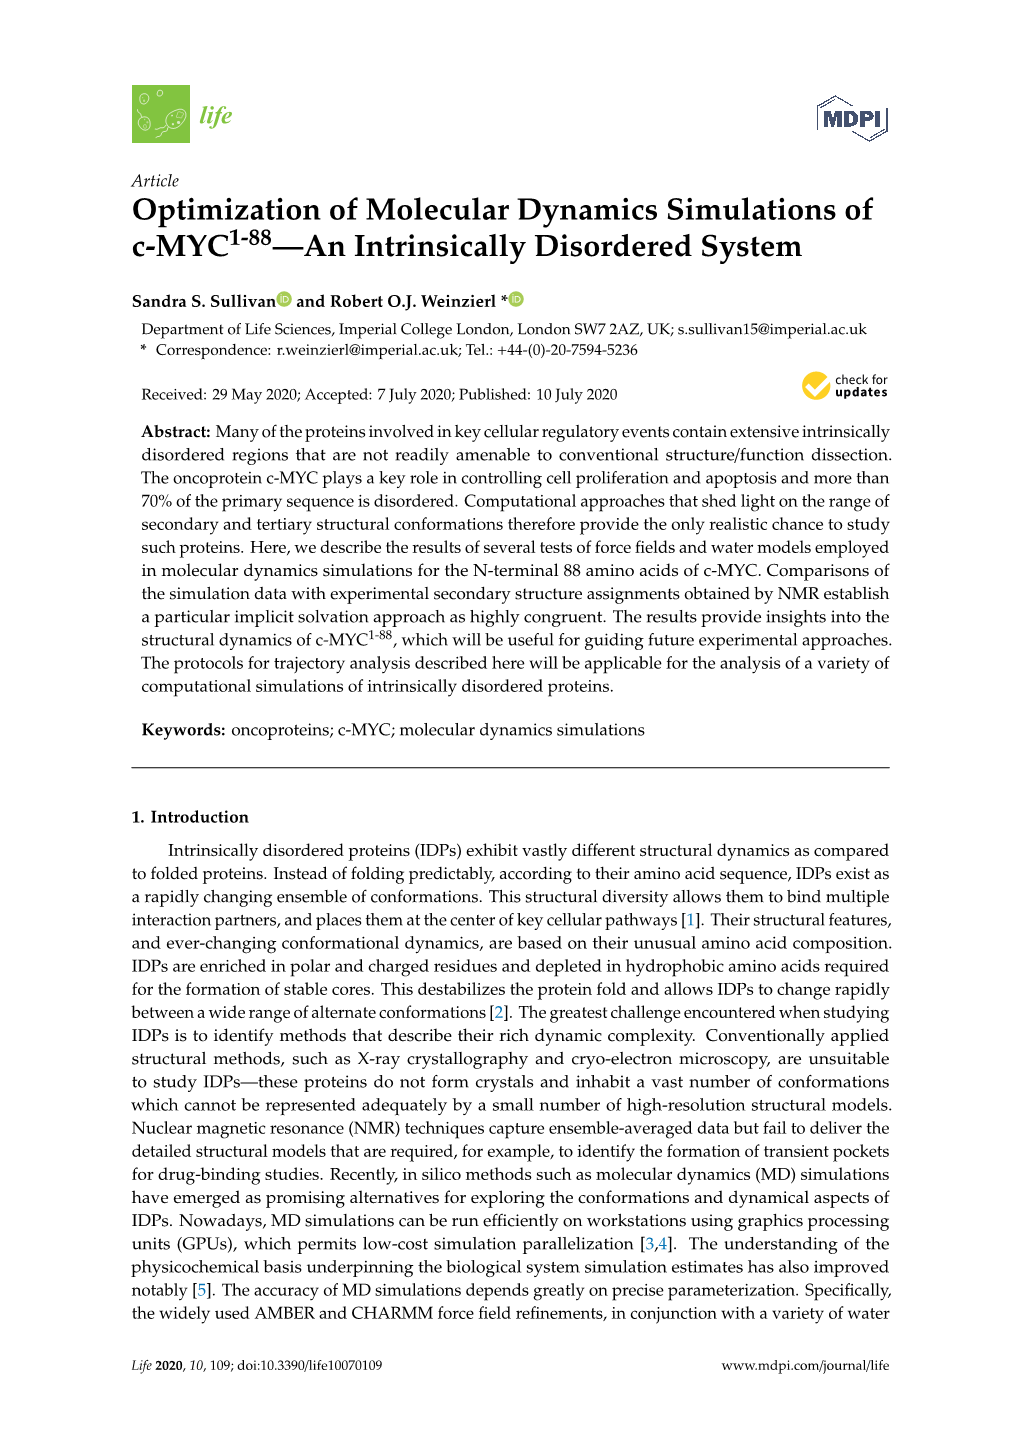 Optimization of Molecular Dynamics Simulations of C-MYC1-88—An Intrinsically Disordered System